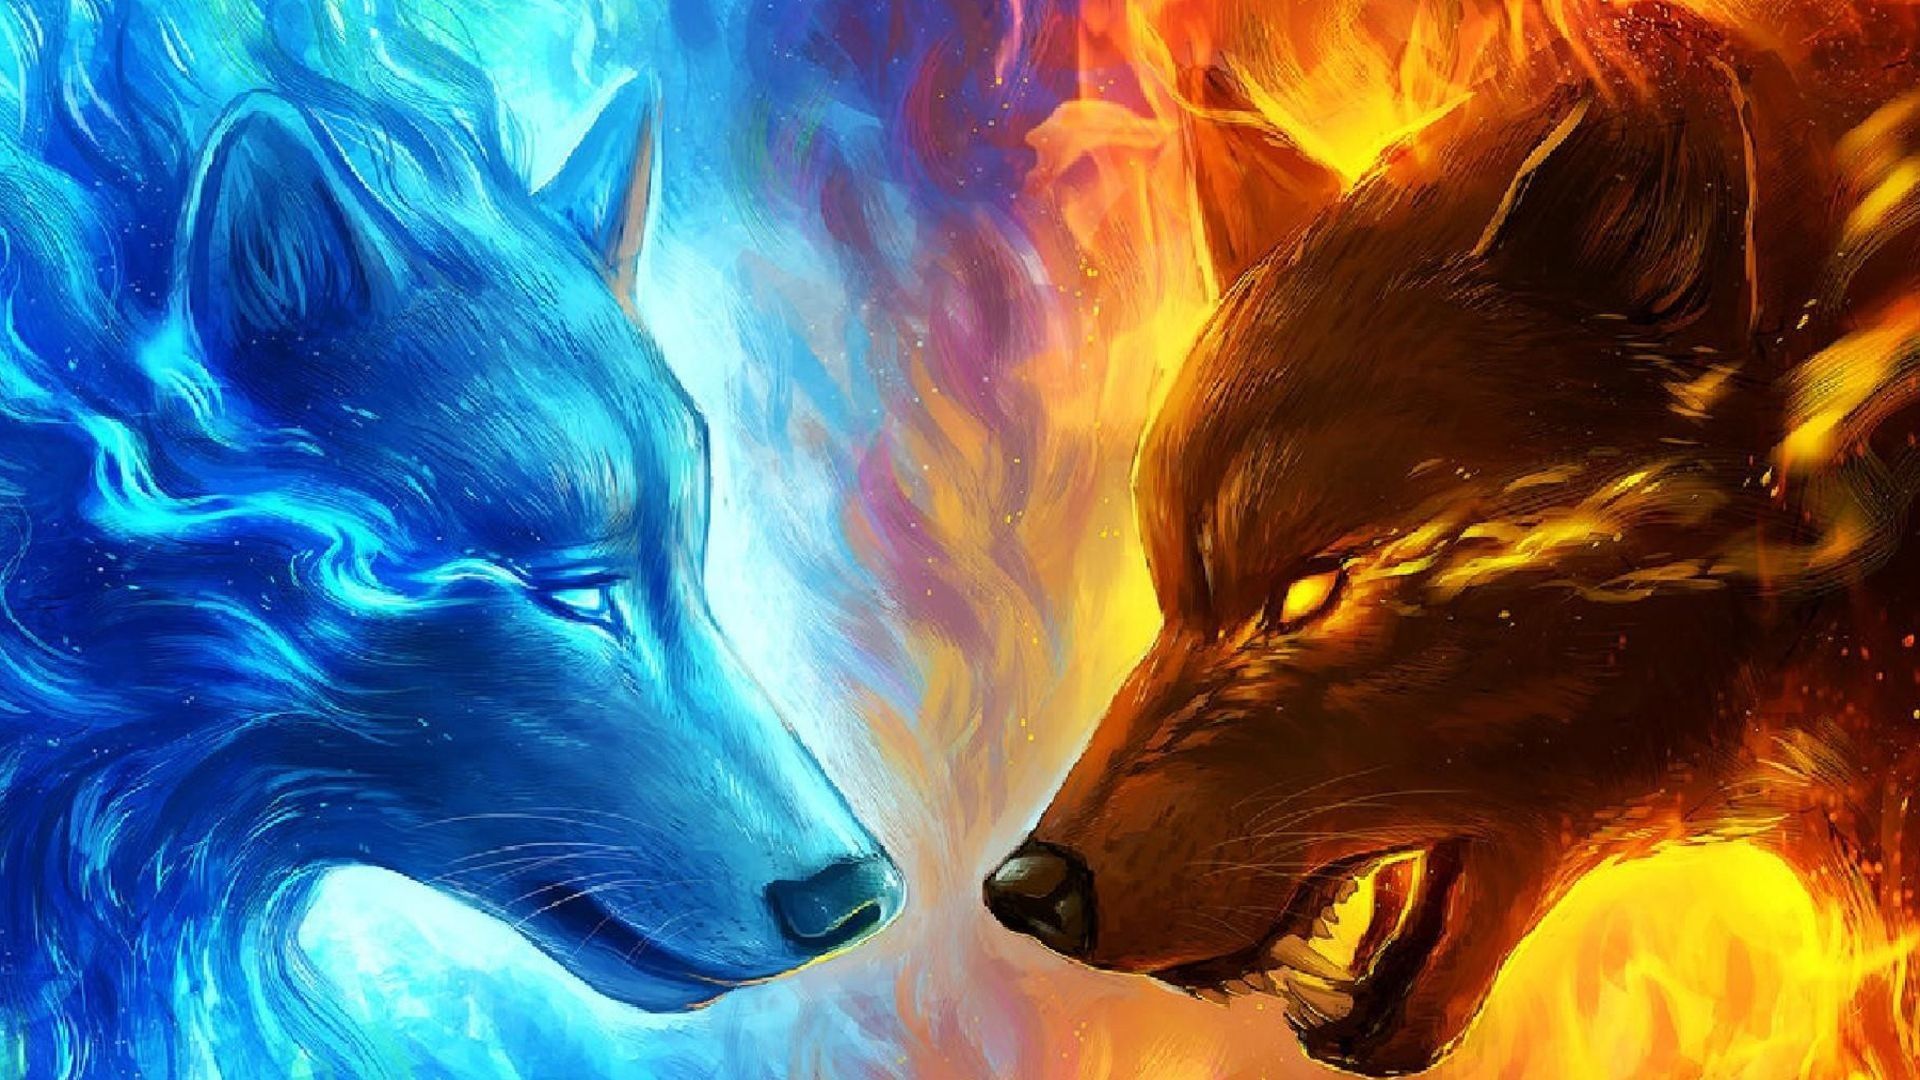 Ice wolf wallpaper, Fantasy wolf.com